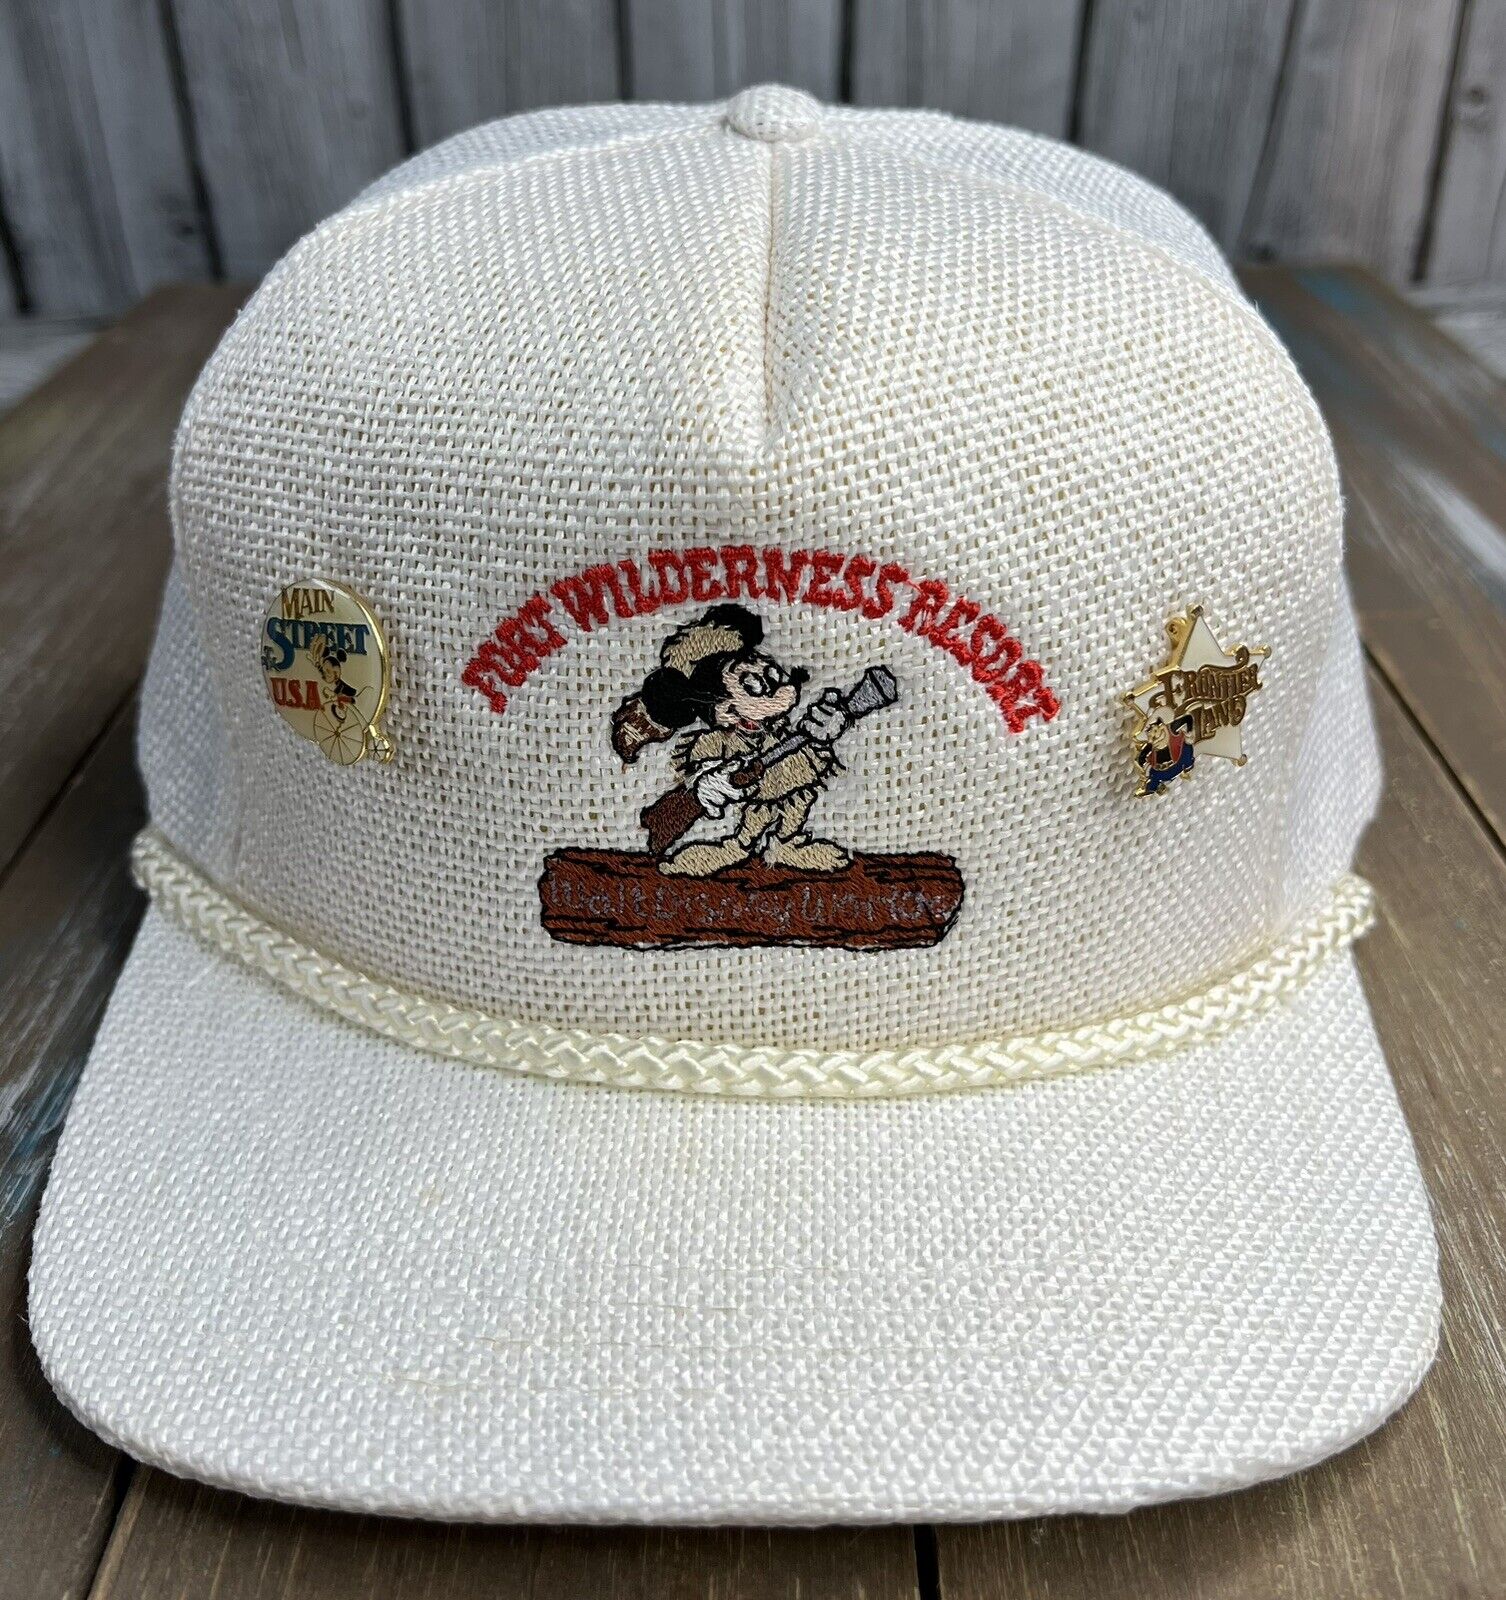 CLEAN RARE Disney World Mesh Rope Fort Wilderness Resort Hat 2 Disney Pin Mickey